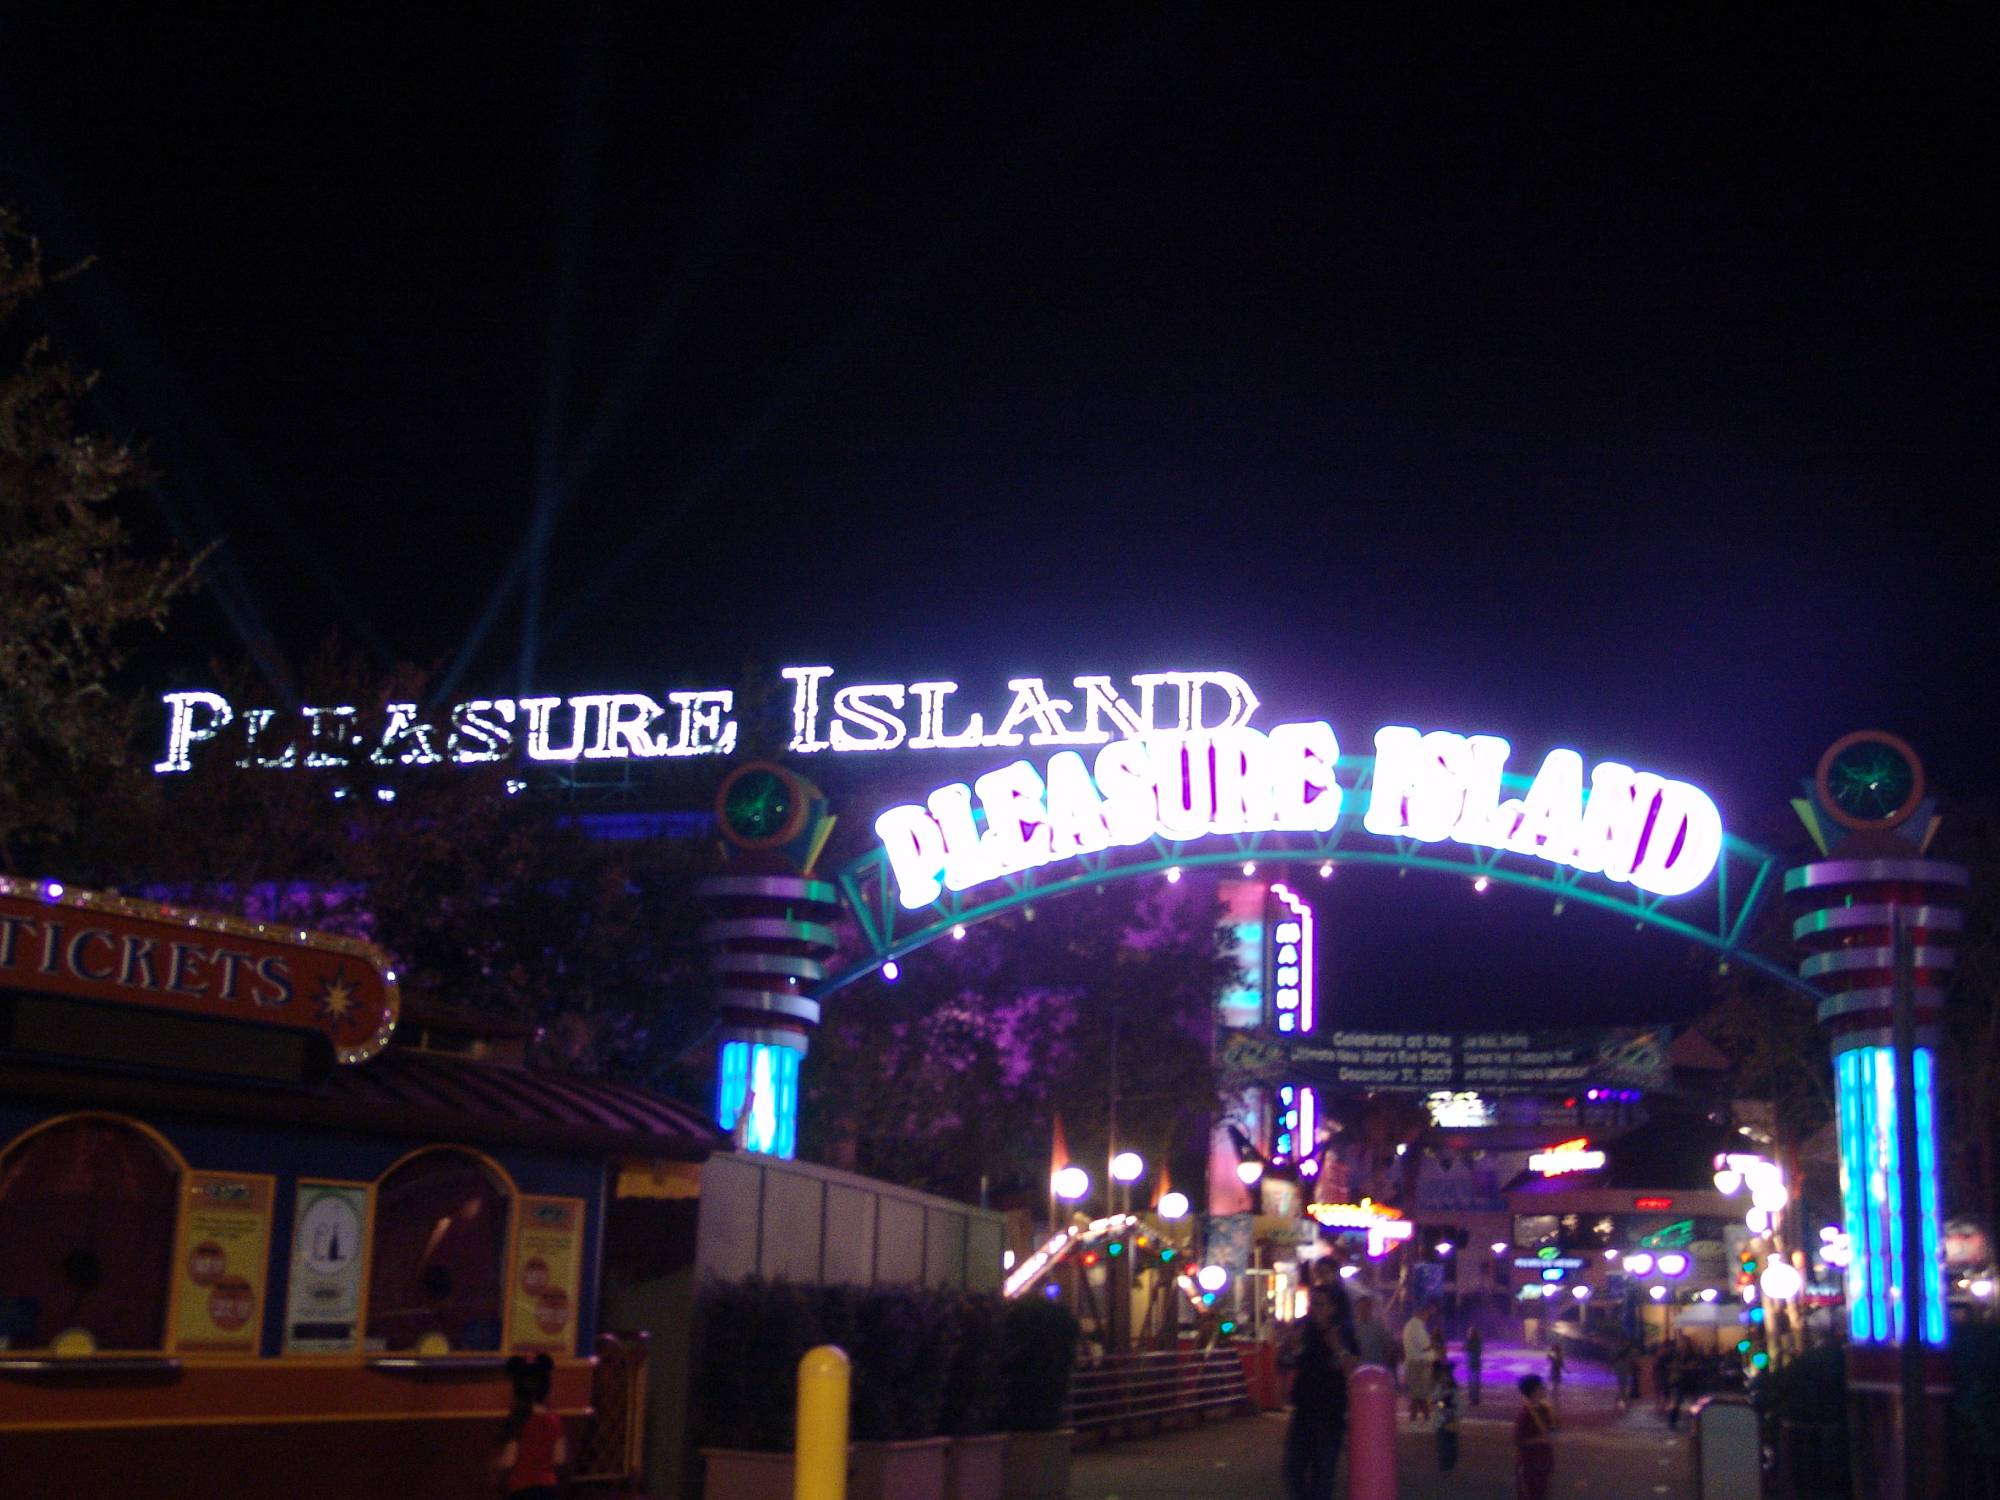 Downtown Disney - Pleasure Island at night